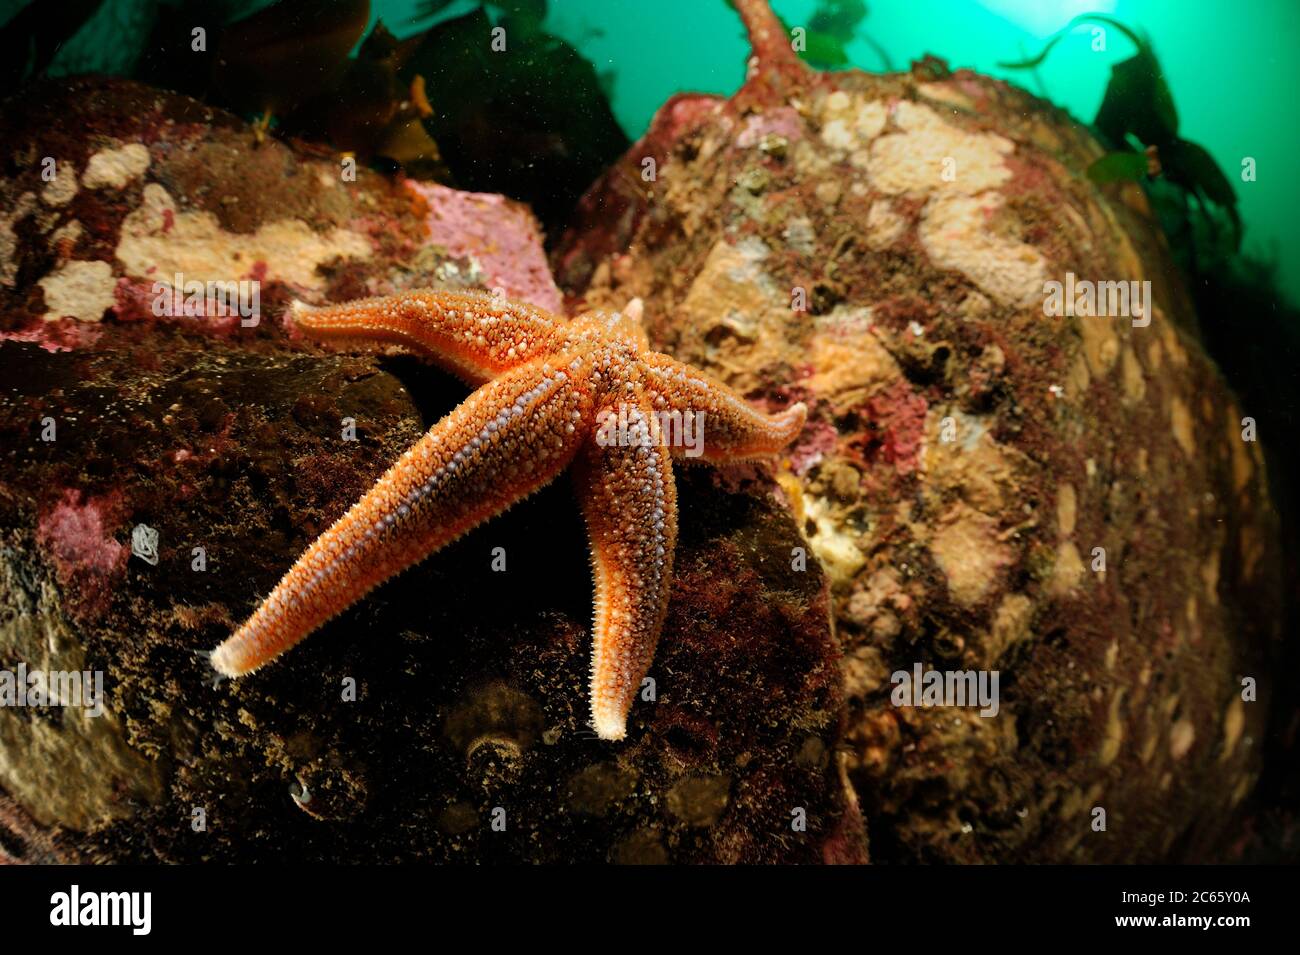 Starfish comune o Common Sea Star (Asterias rubens), Oceano Atlantico, Strømsholmen, Norvegia nordoccidentale Foto Stock